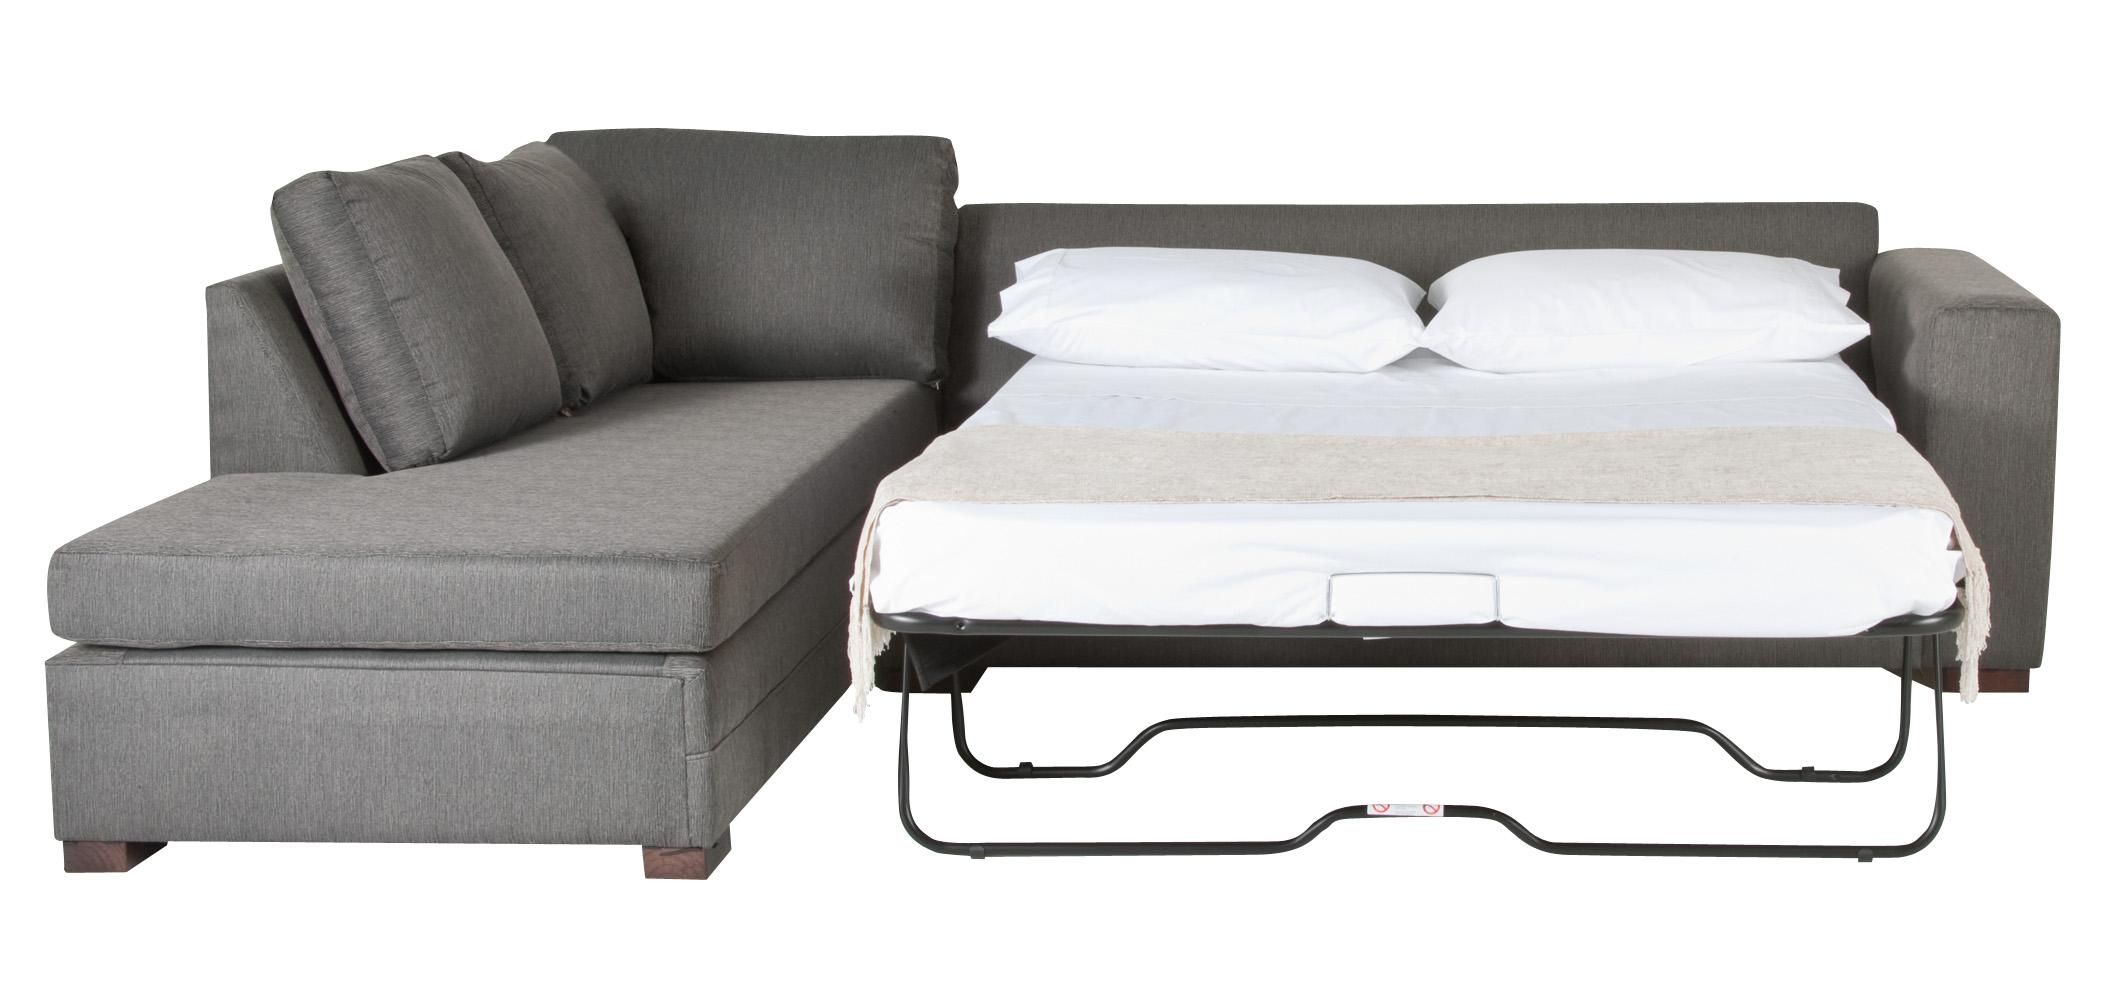 Furniture: Sleeper Sofa Sectional Ikea | Grey Sectional Sofa For Sectional Sofa Beds (View 14 of 20)